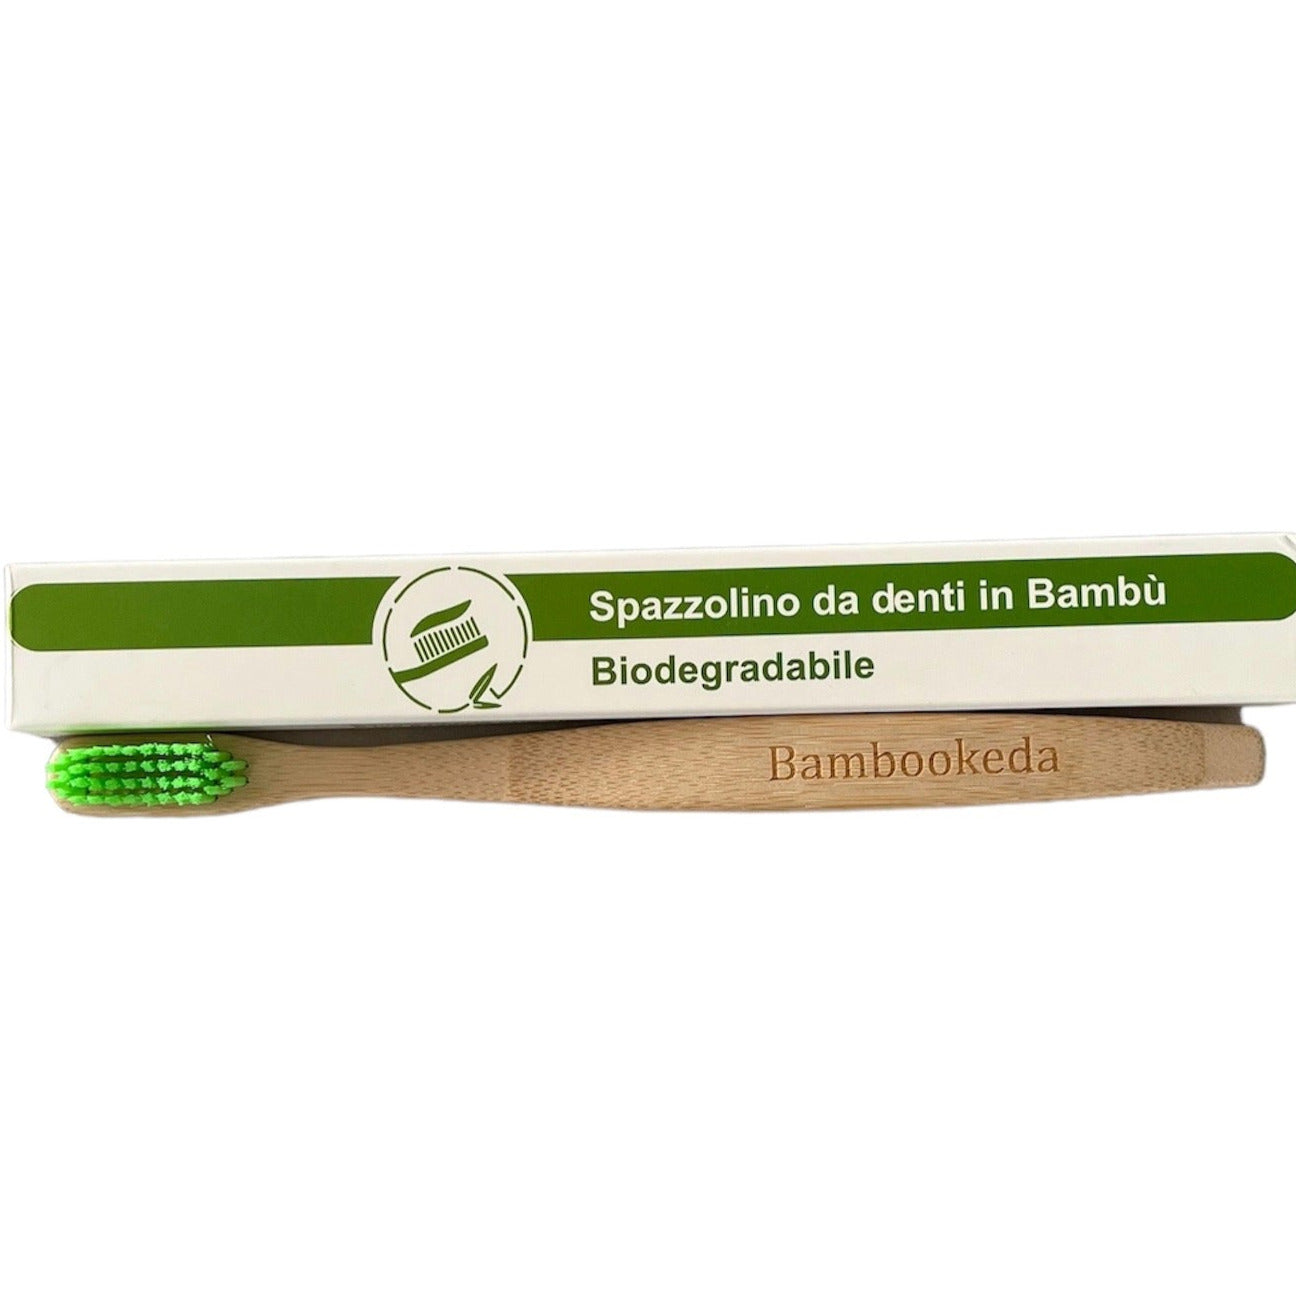 Spazzolino da denti Bambù